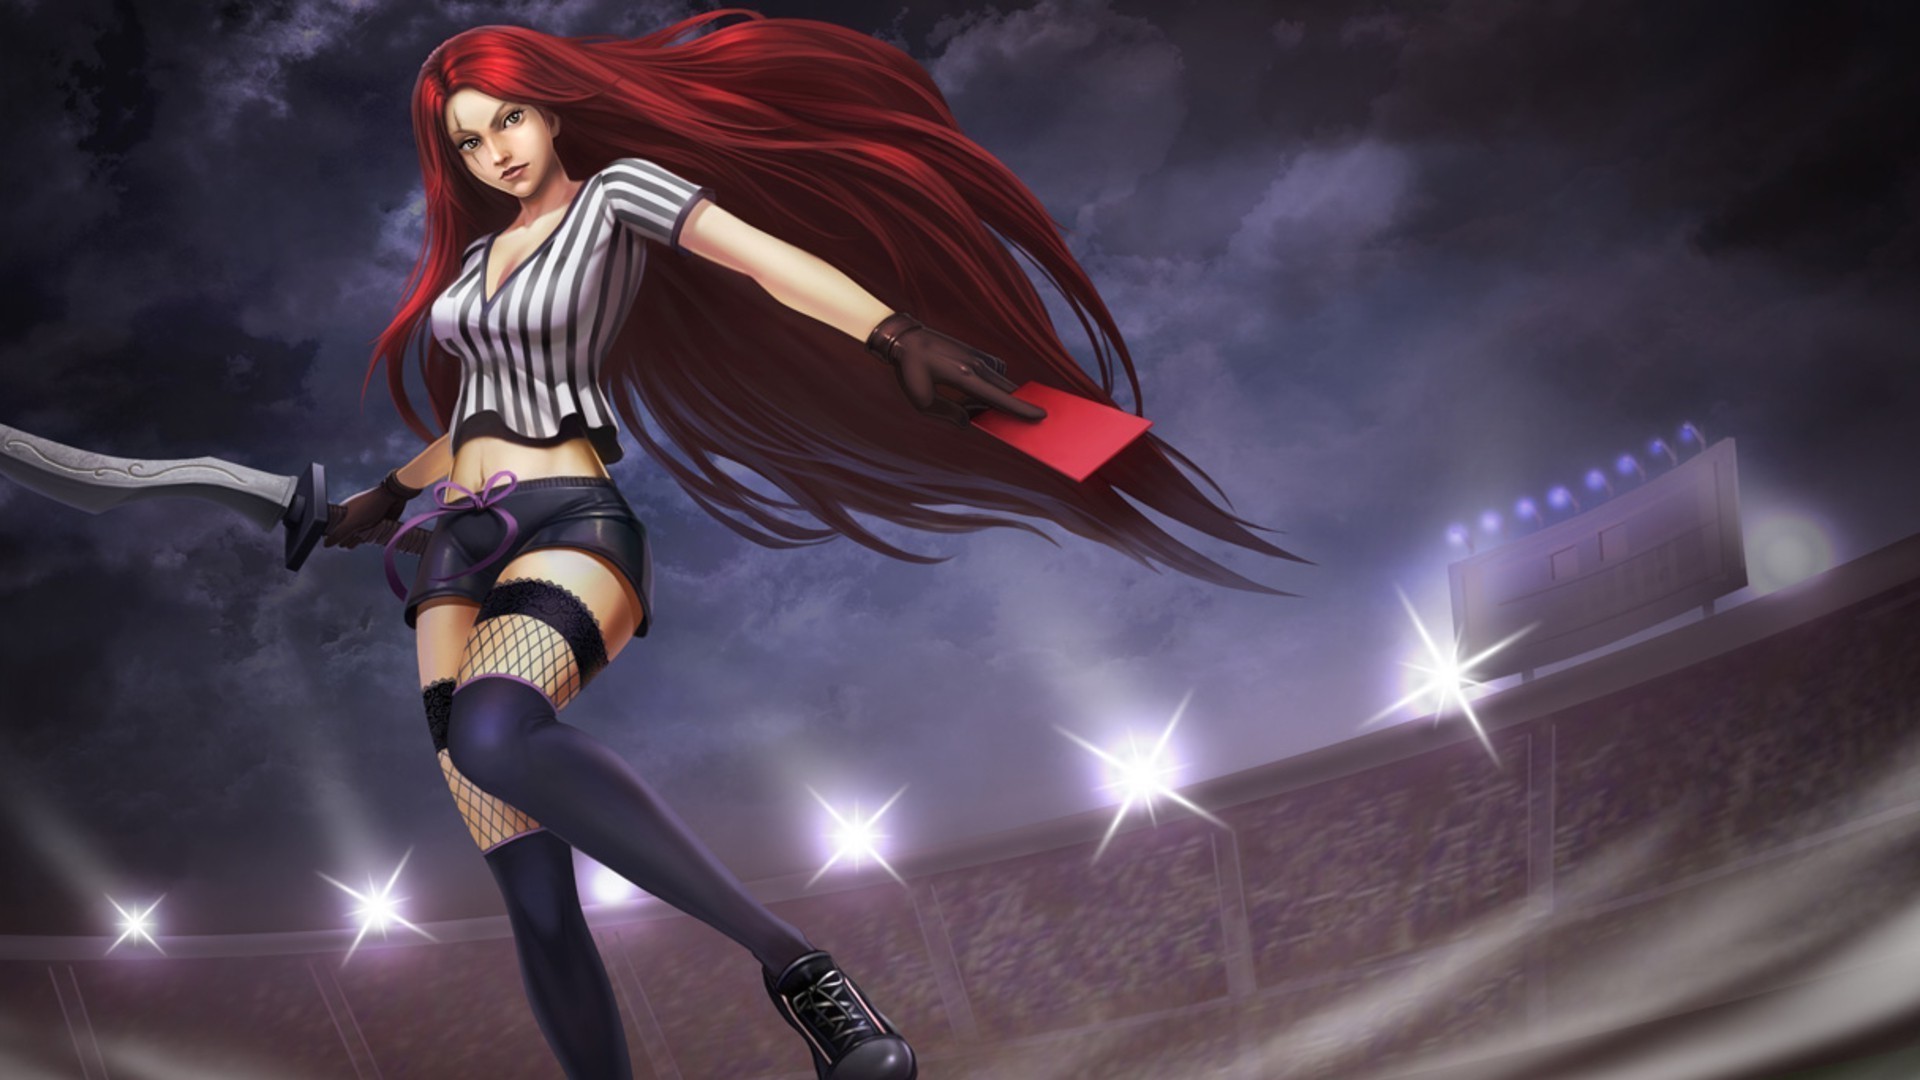 katarina wallpaper,cg artwork,fictional character,long hair,red hair,anime